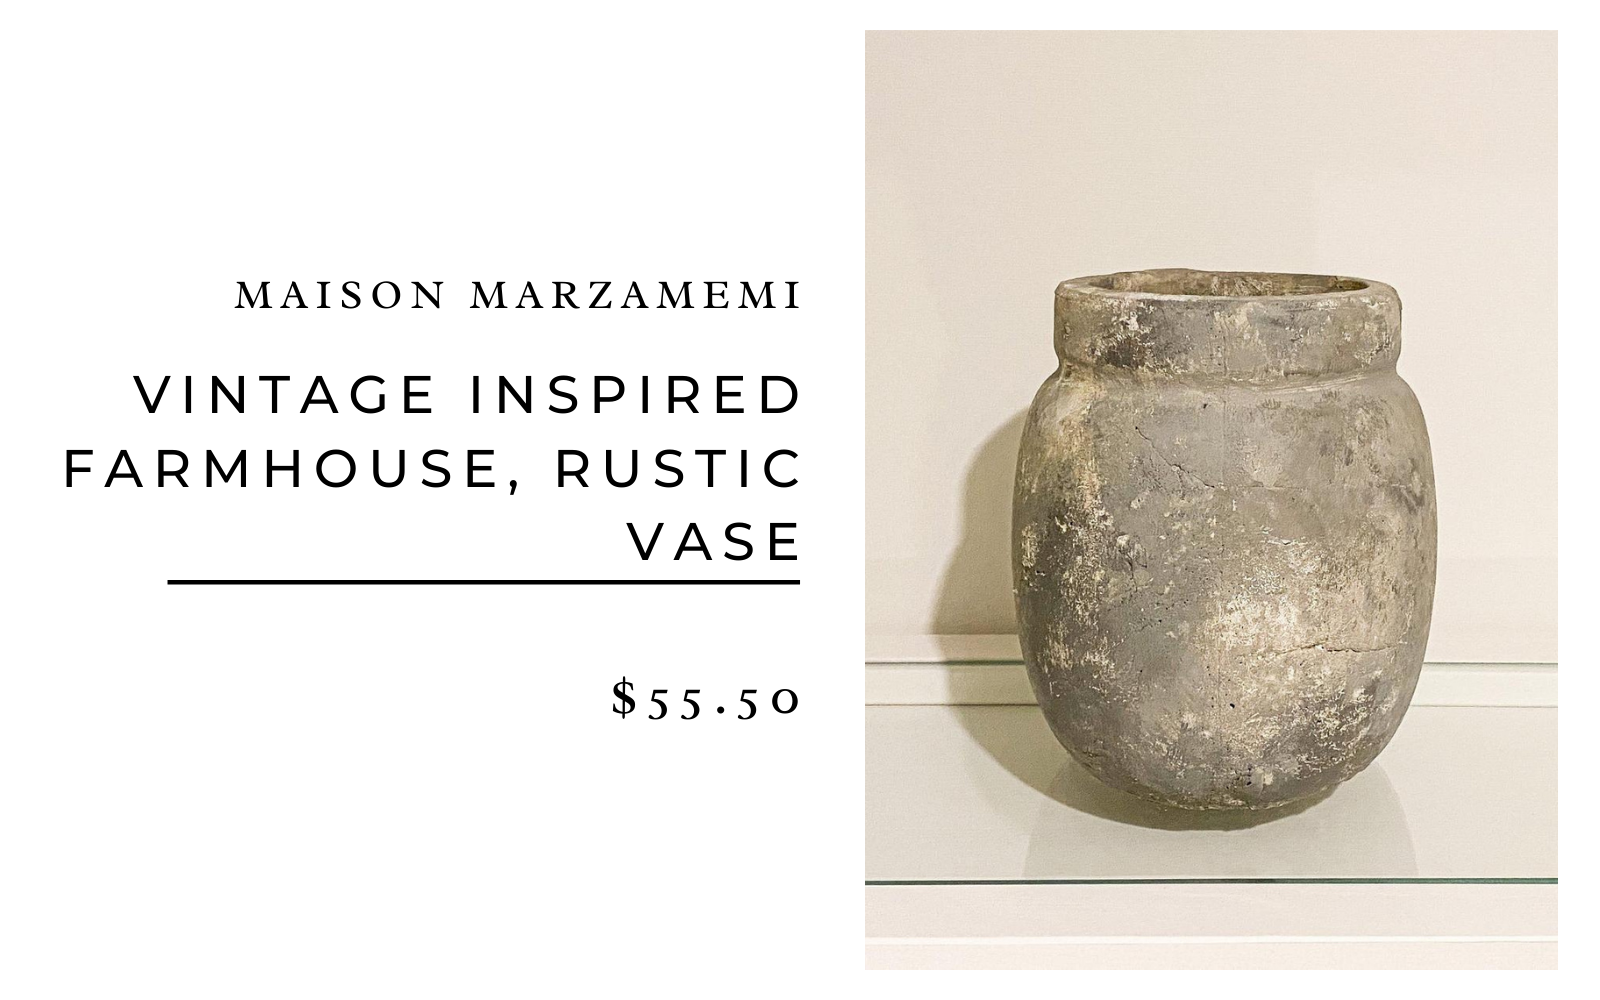 Maison Marzamemi Vintage Inspired Farmhouse Rustic Vase $55.50